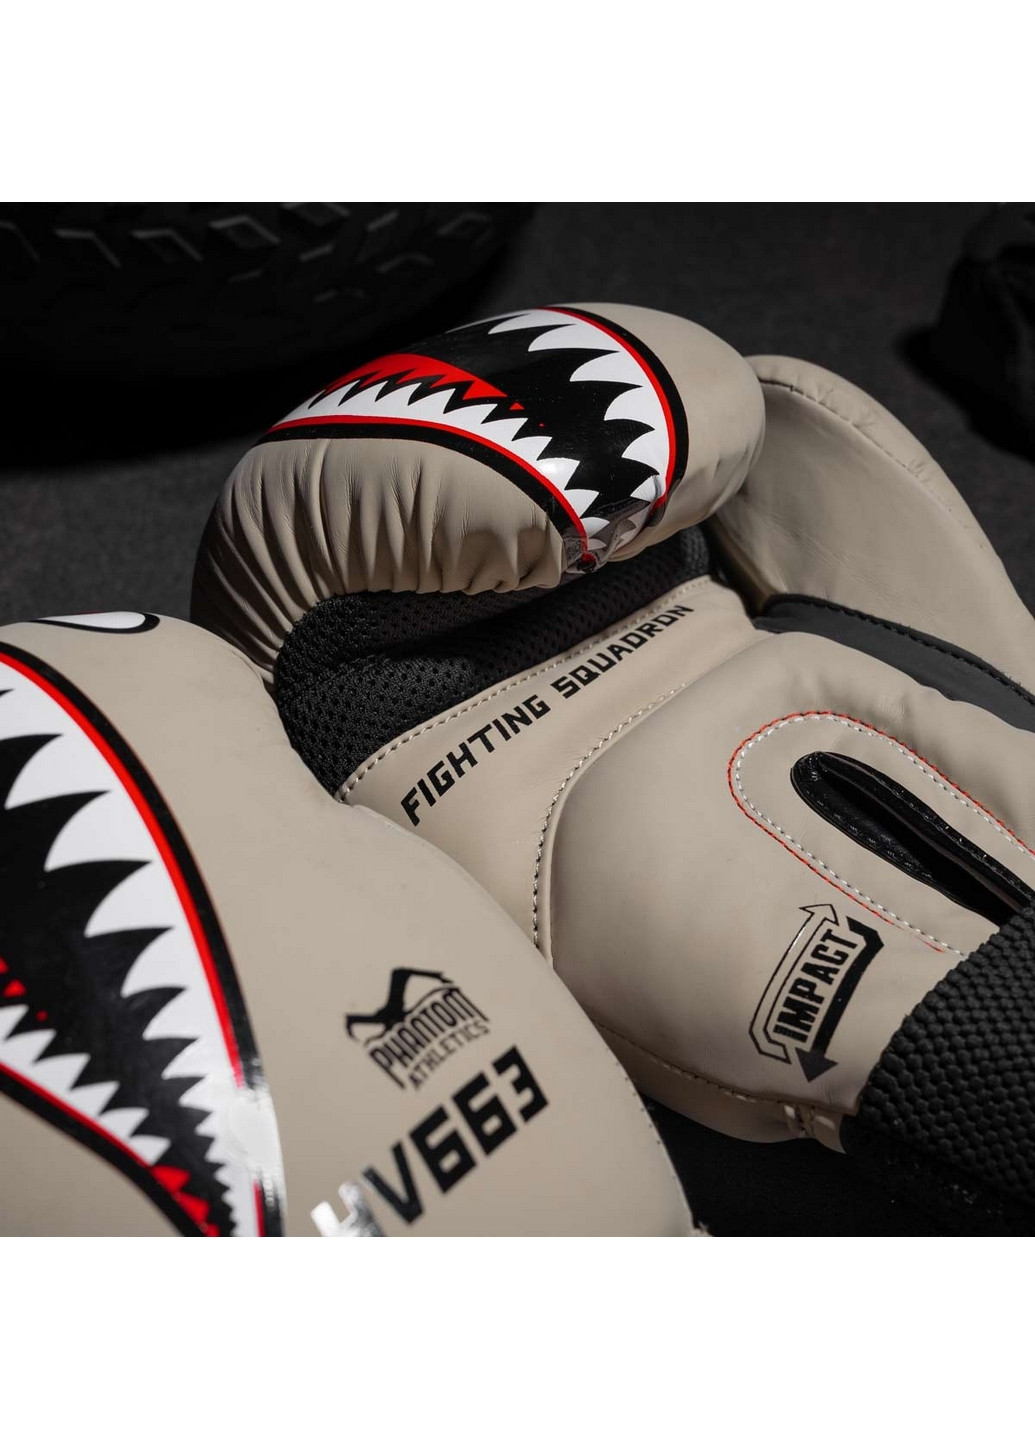 Боксерские перчатки Fight Squad Sand Phantom (276983209)